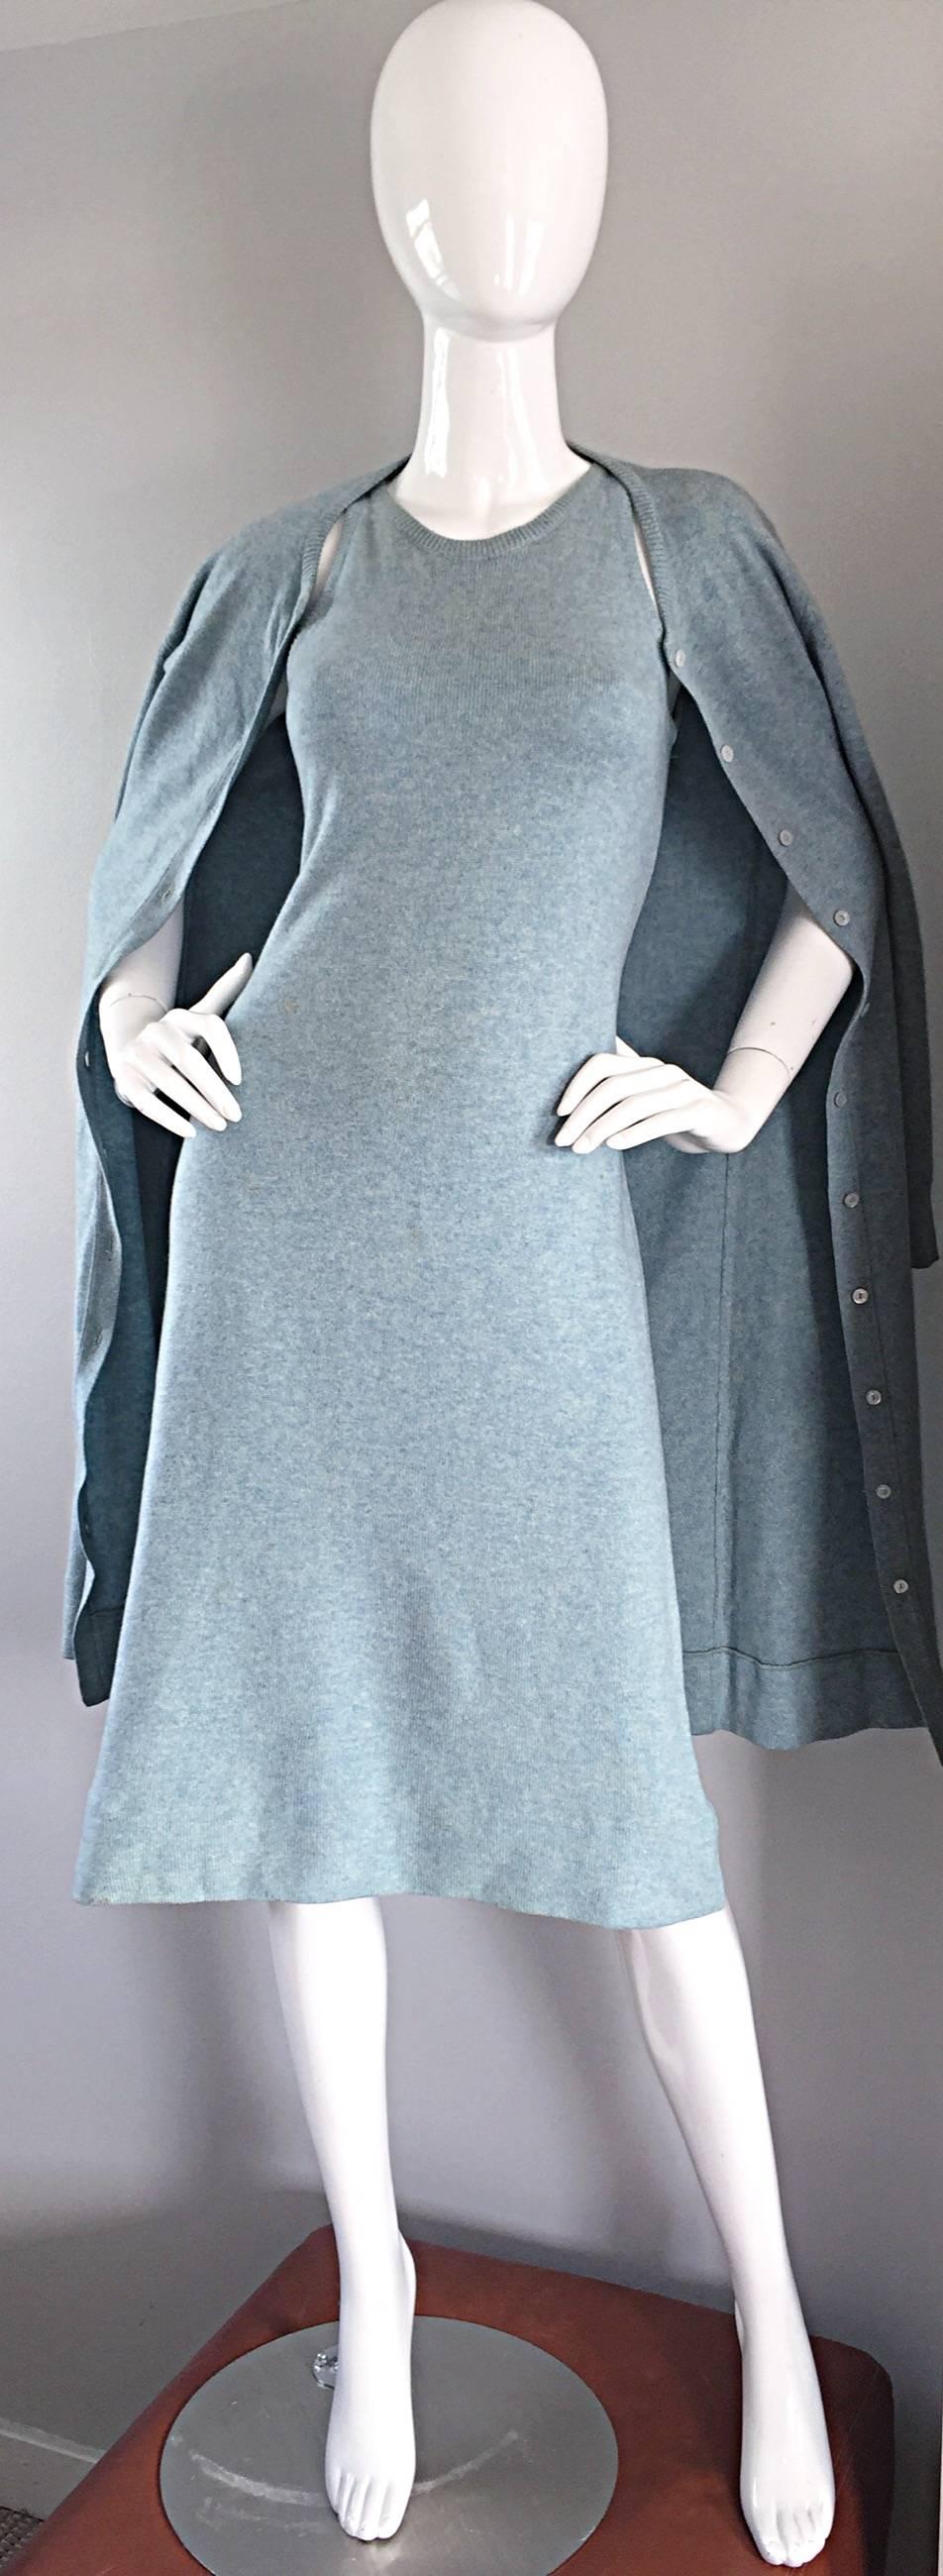 cardigan for sleeveless dress